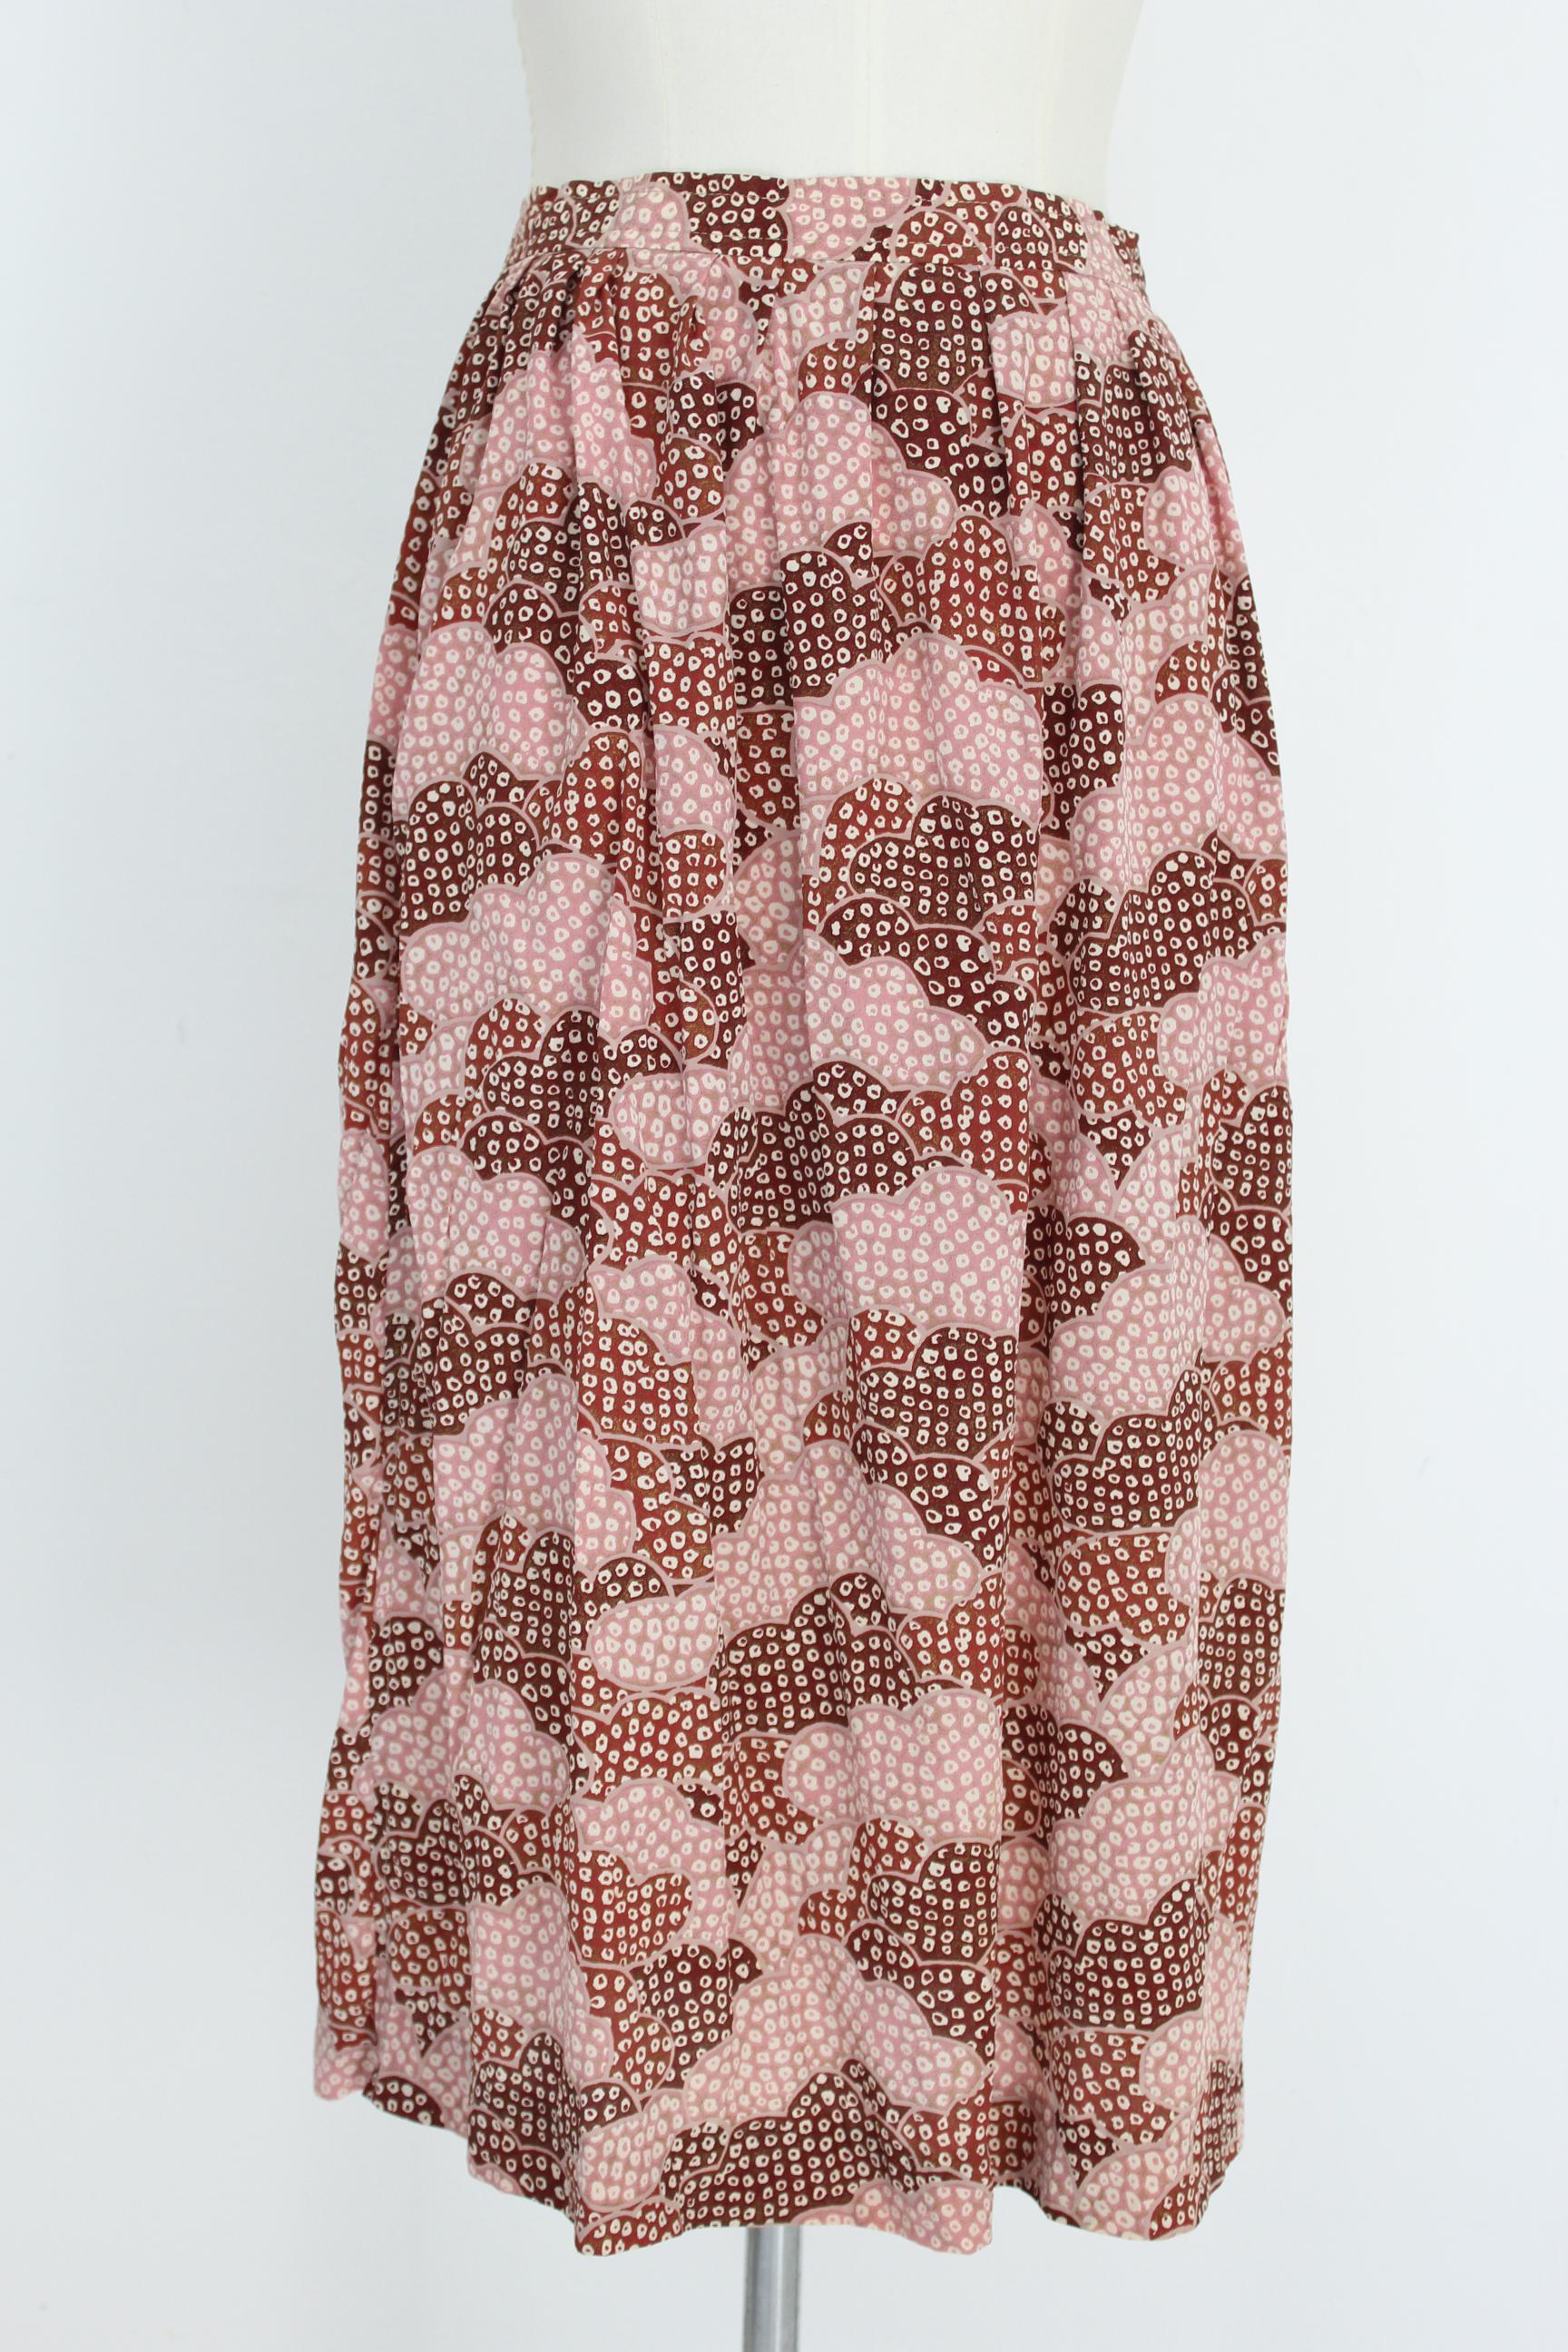 Women's Emanuel Ungaro Pink Silk Vintage Polka Dot Casual Suit Skirt and Shirt